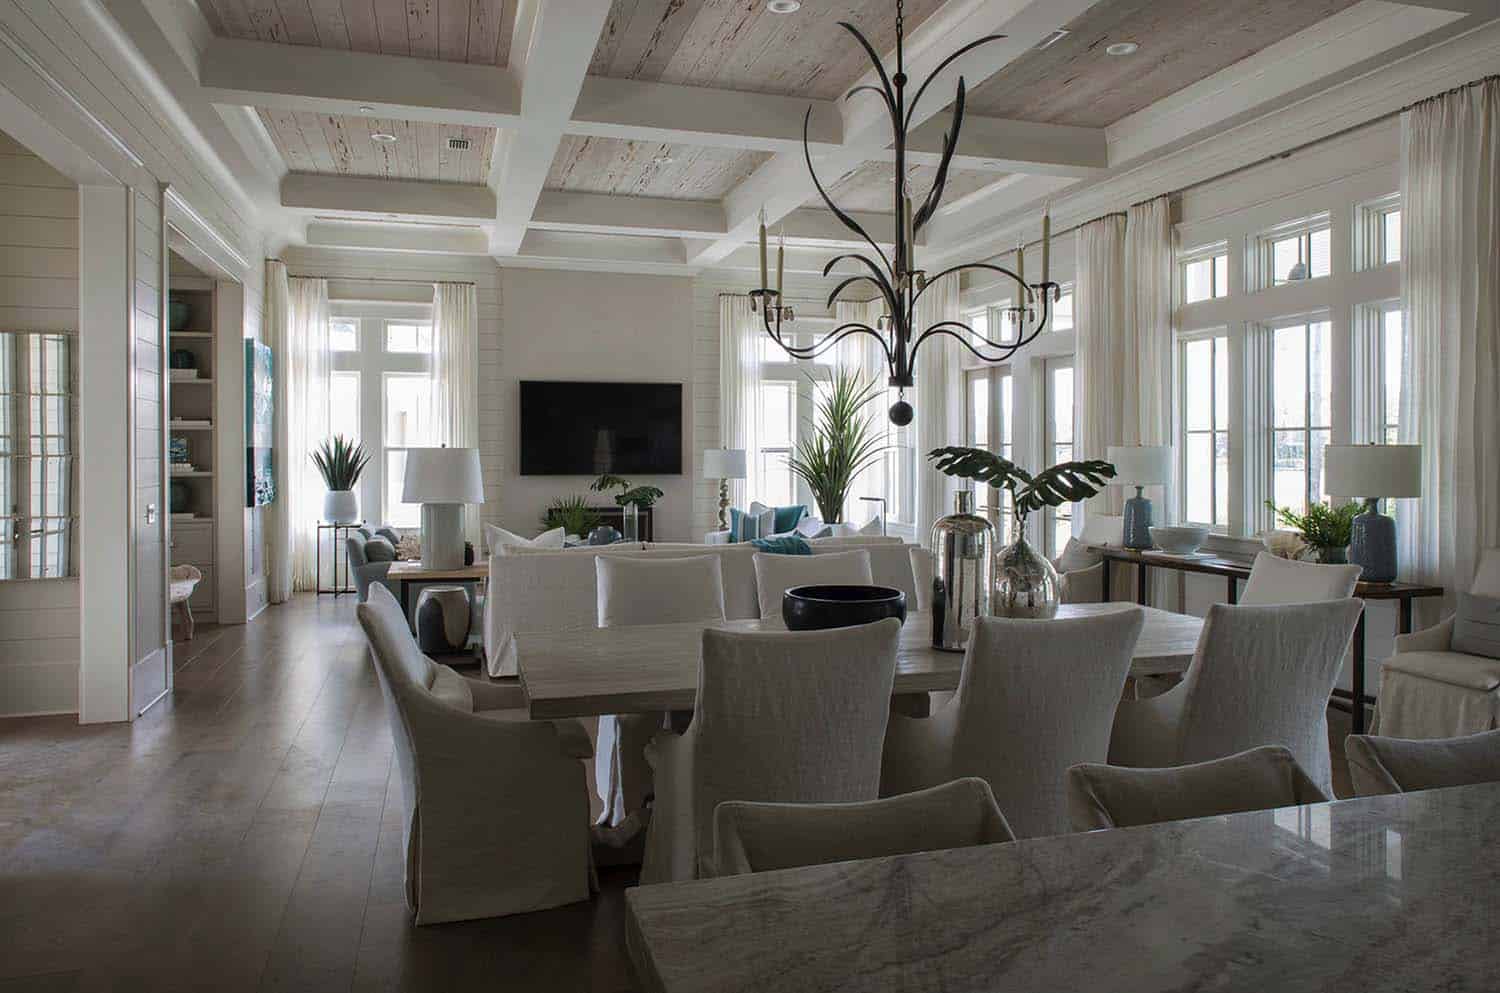 beach-style-dining-room